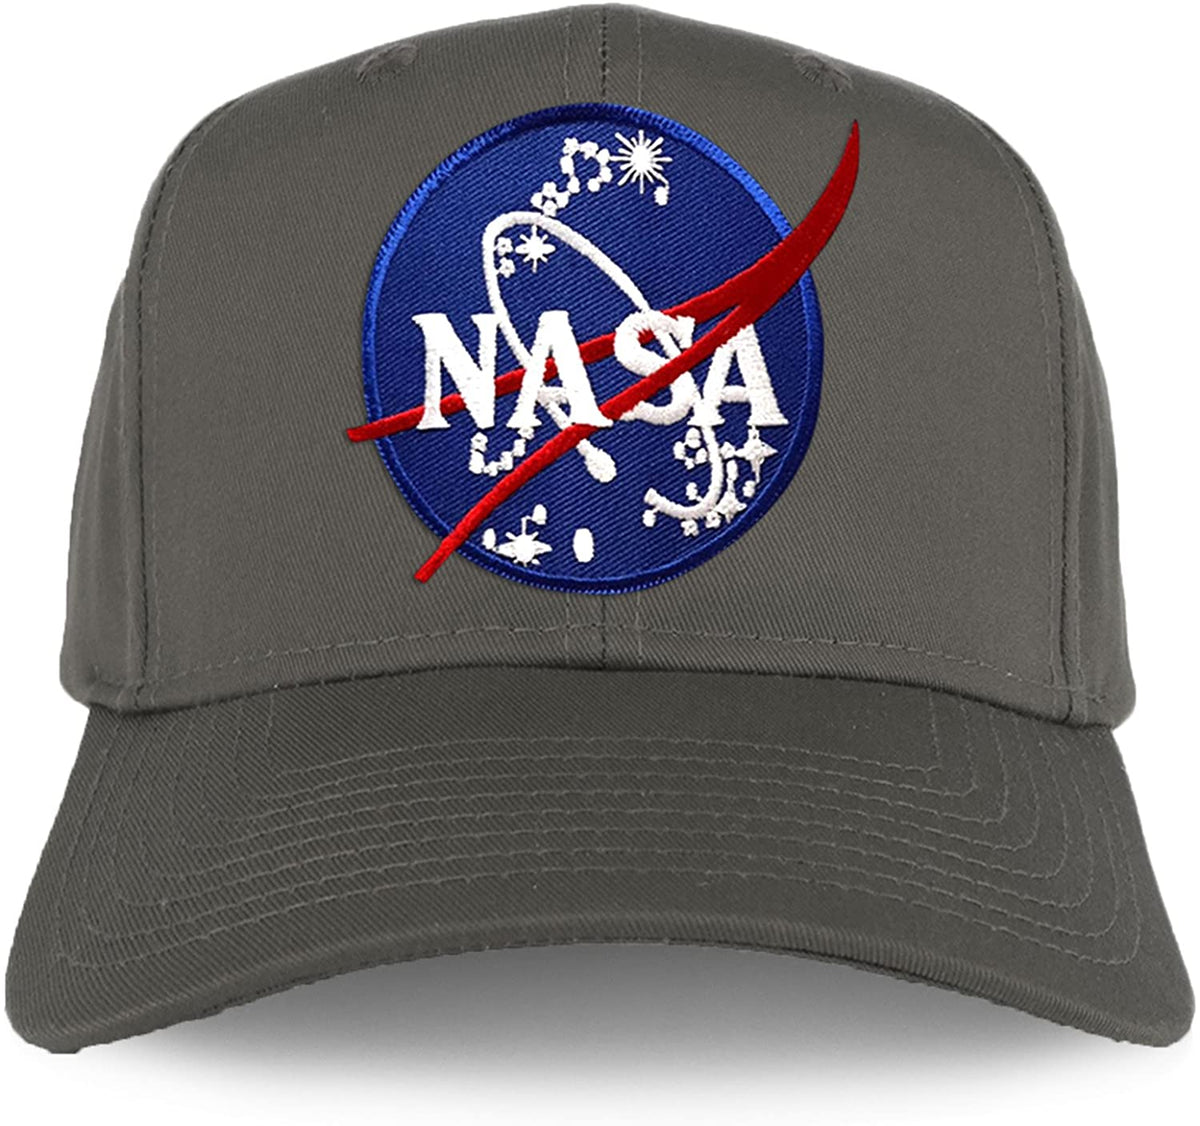 Armycrew XXL Oversize NASA Insignia Logo Iron On Patch Solid Baseball Cap